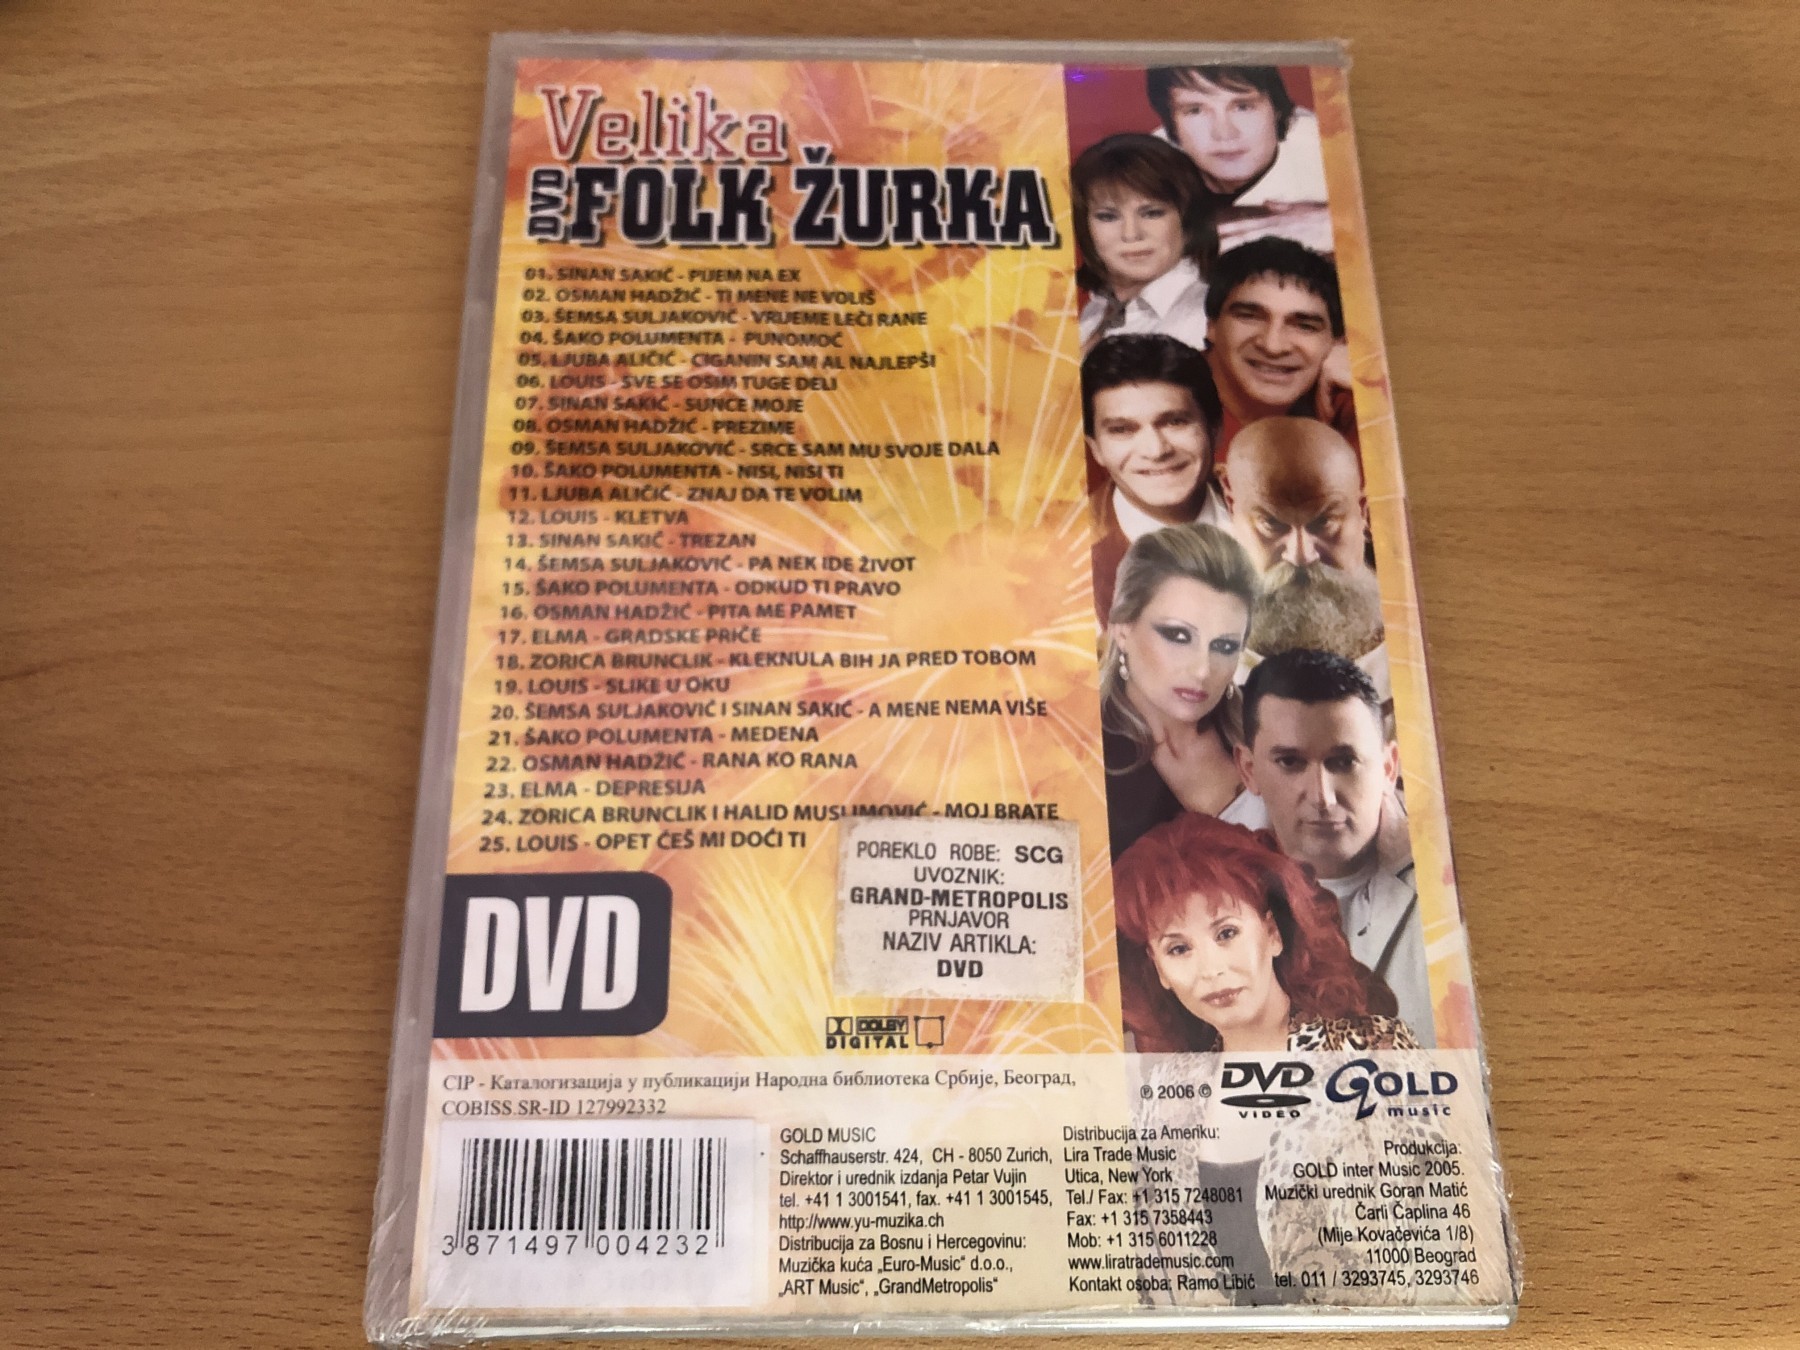 Velika Folk Zurka DVD 2005 Gold Productions